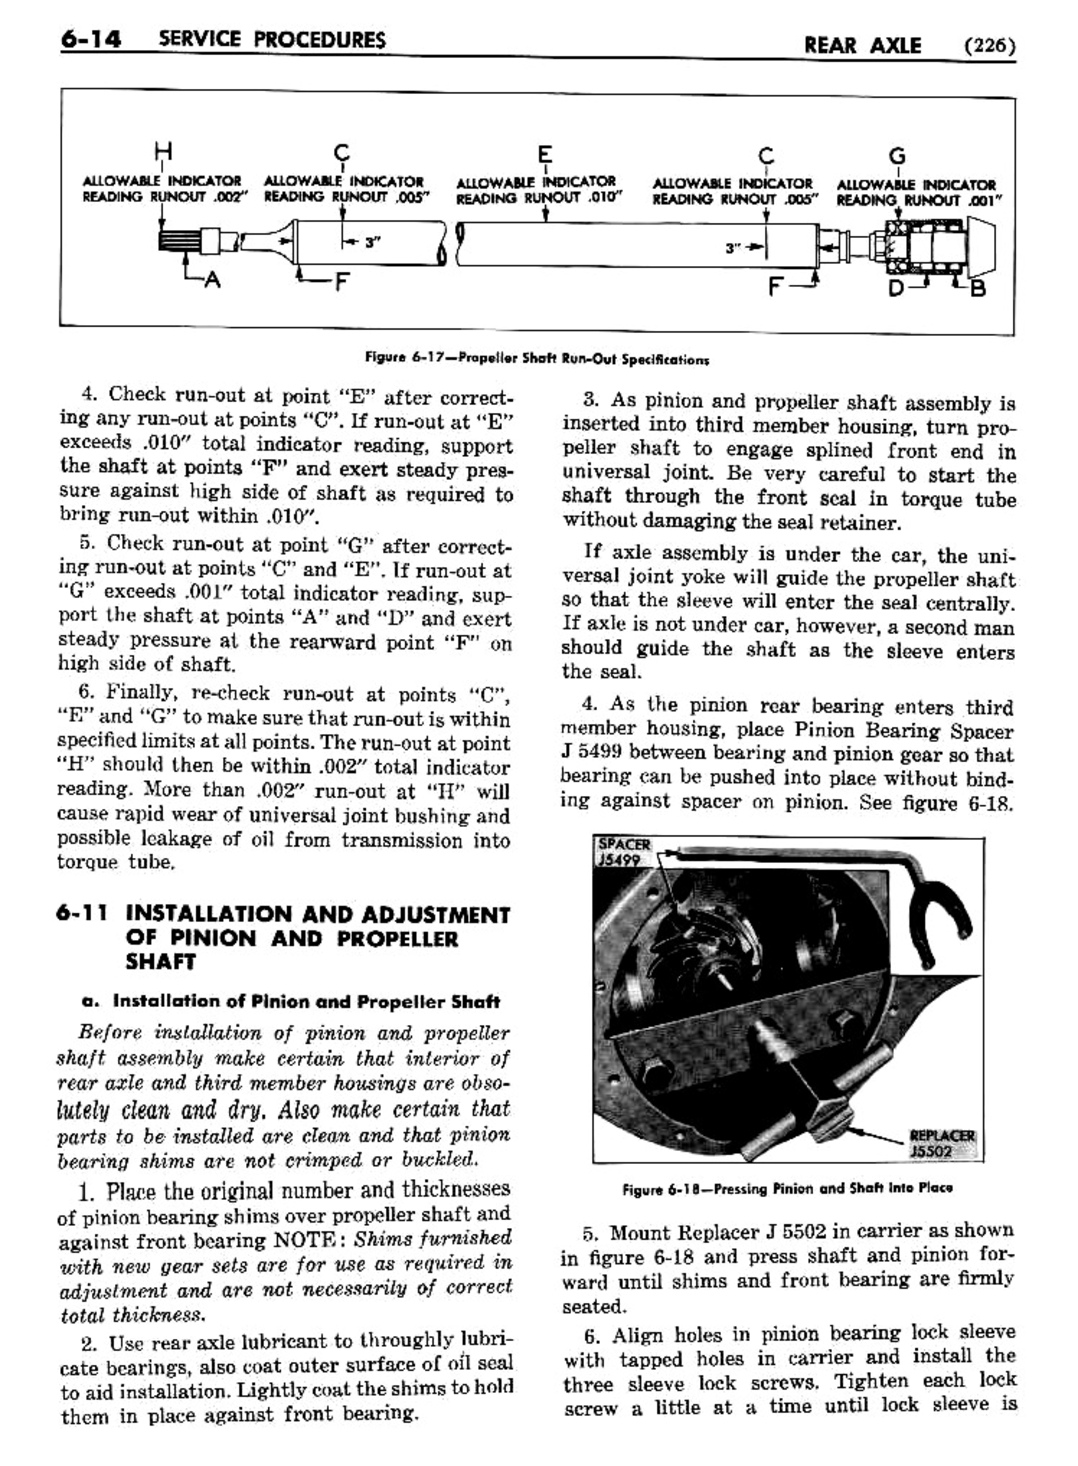 n_07 1954 Buick Shop Manual - Rear Axle-014-014.jpg